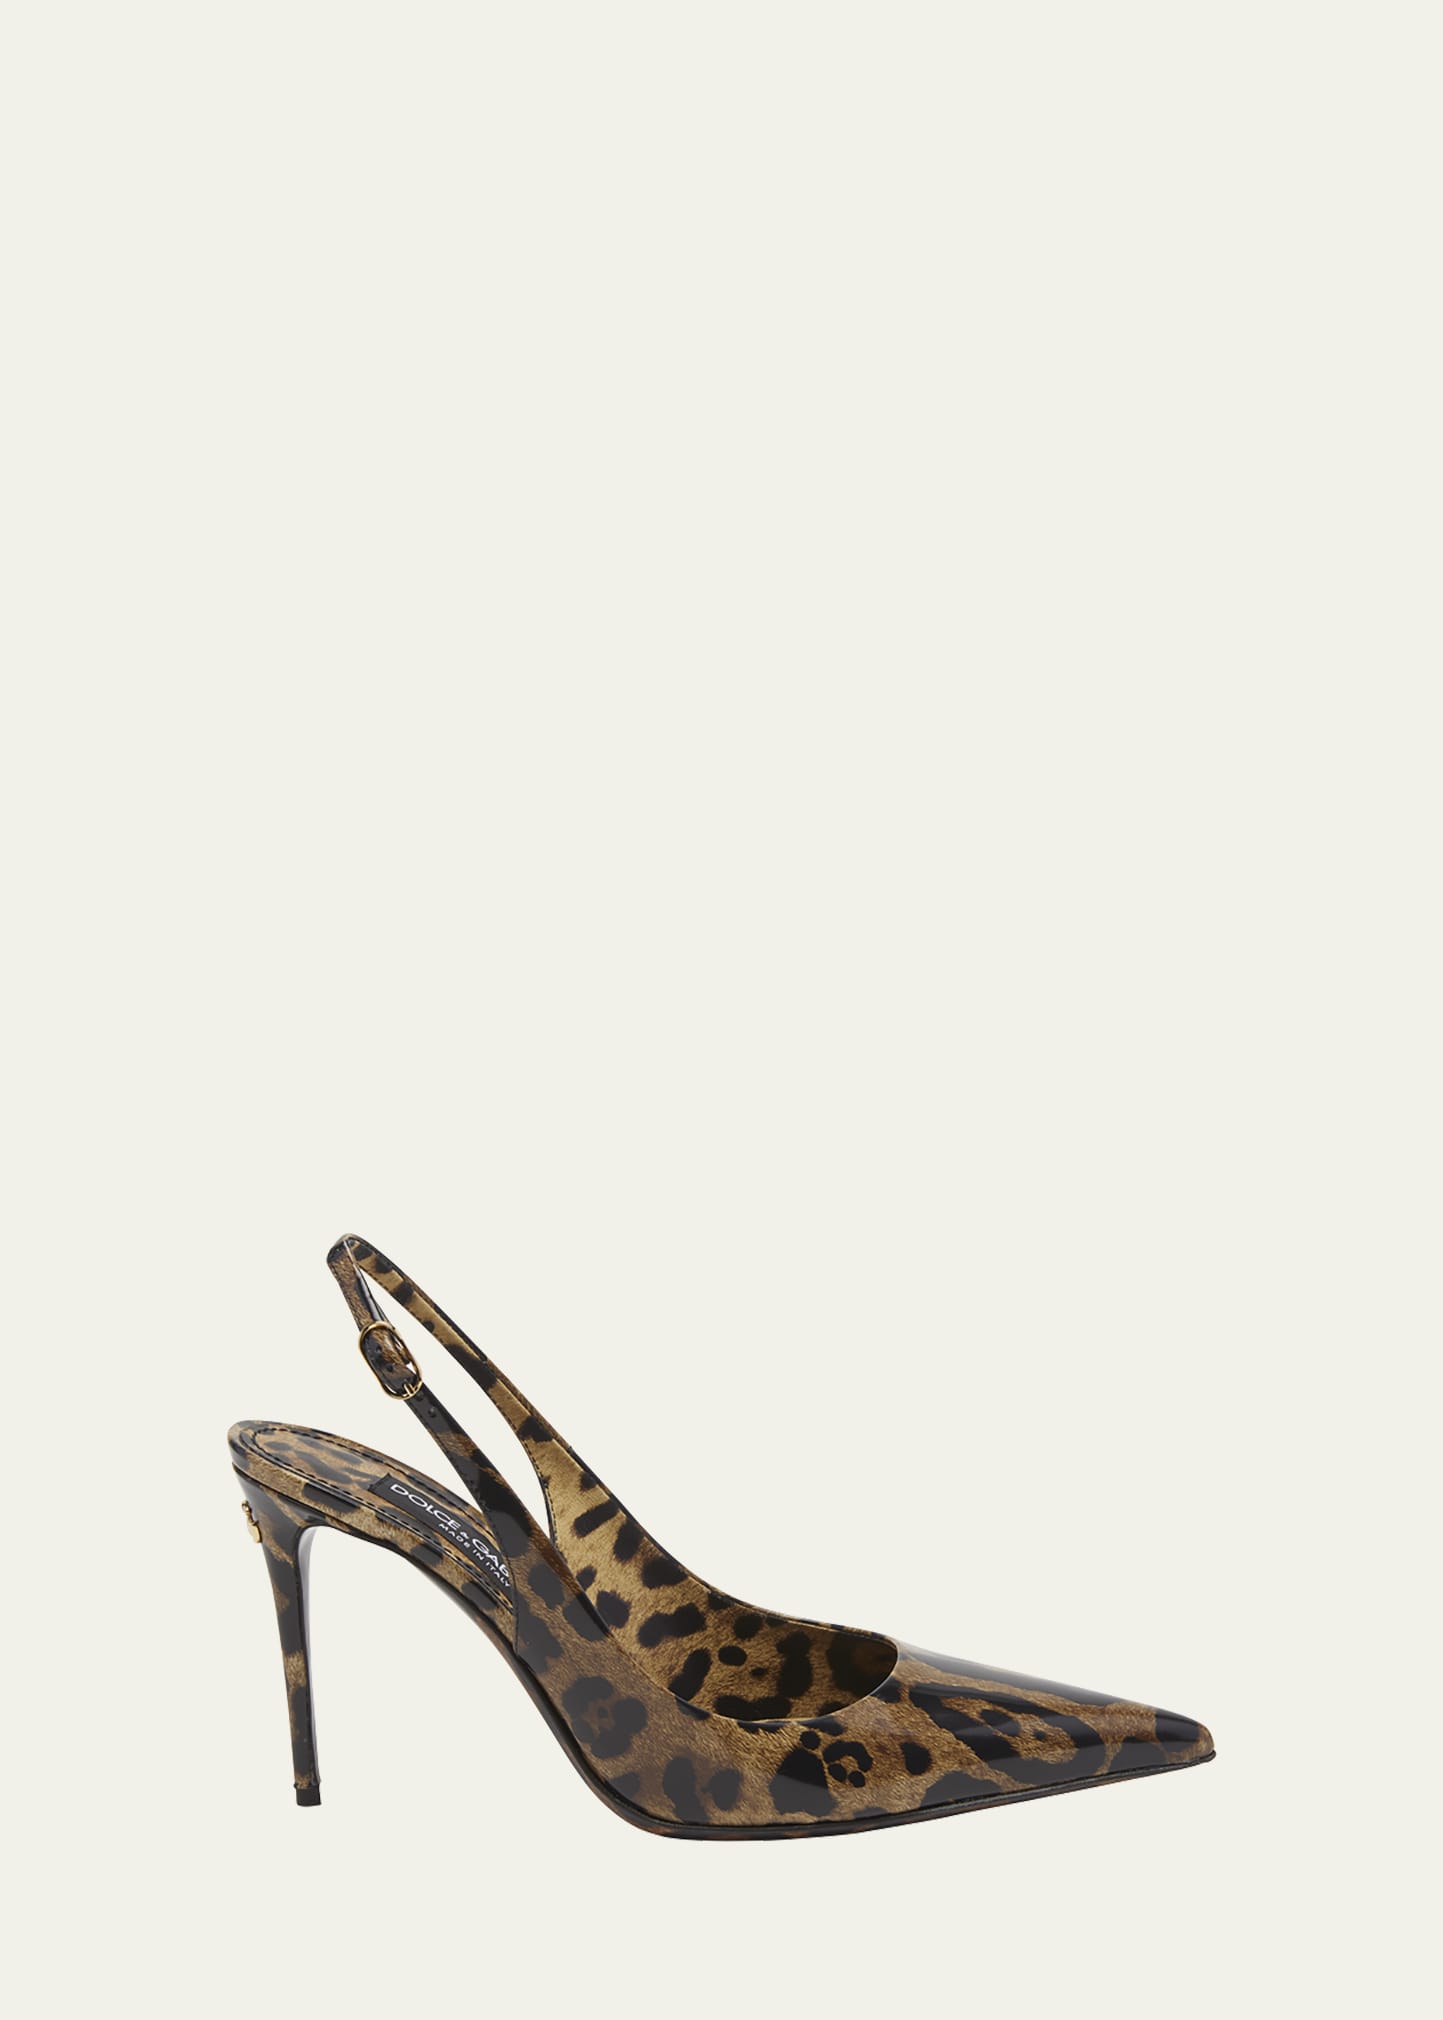 Dolce&Gabbana Dolce Leopard Slingback Pumps | Bergdorf Goodman